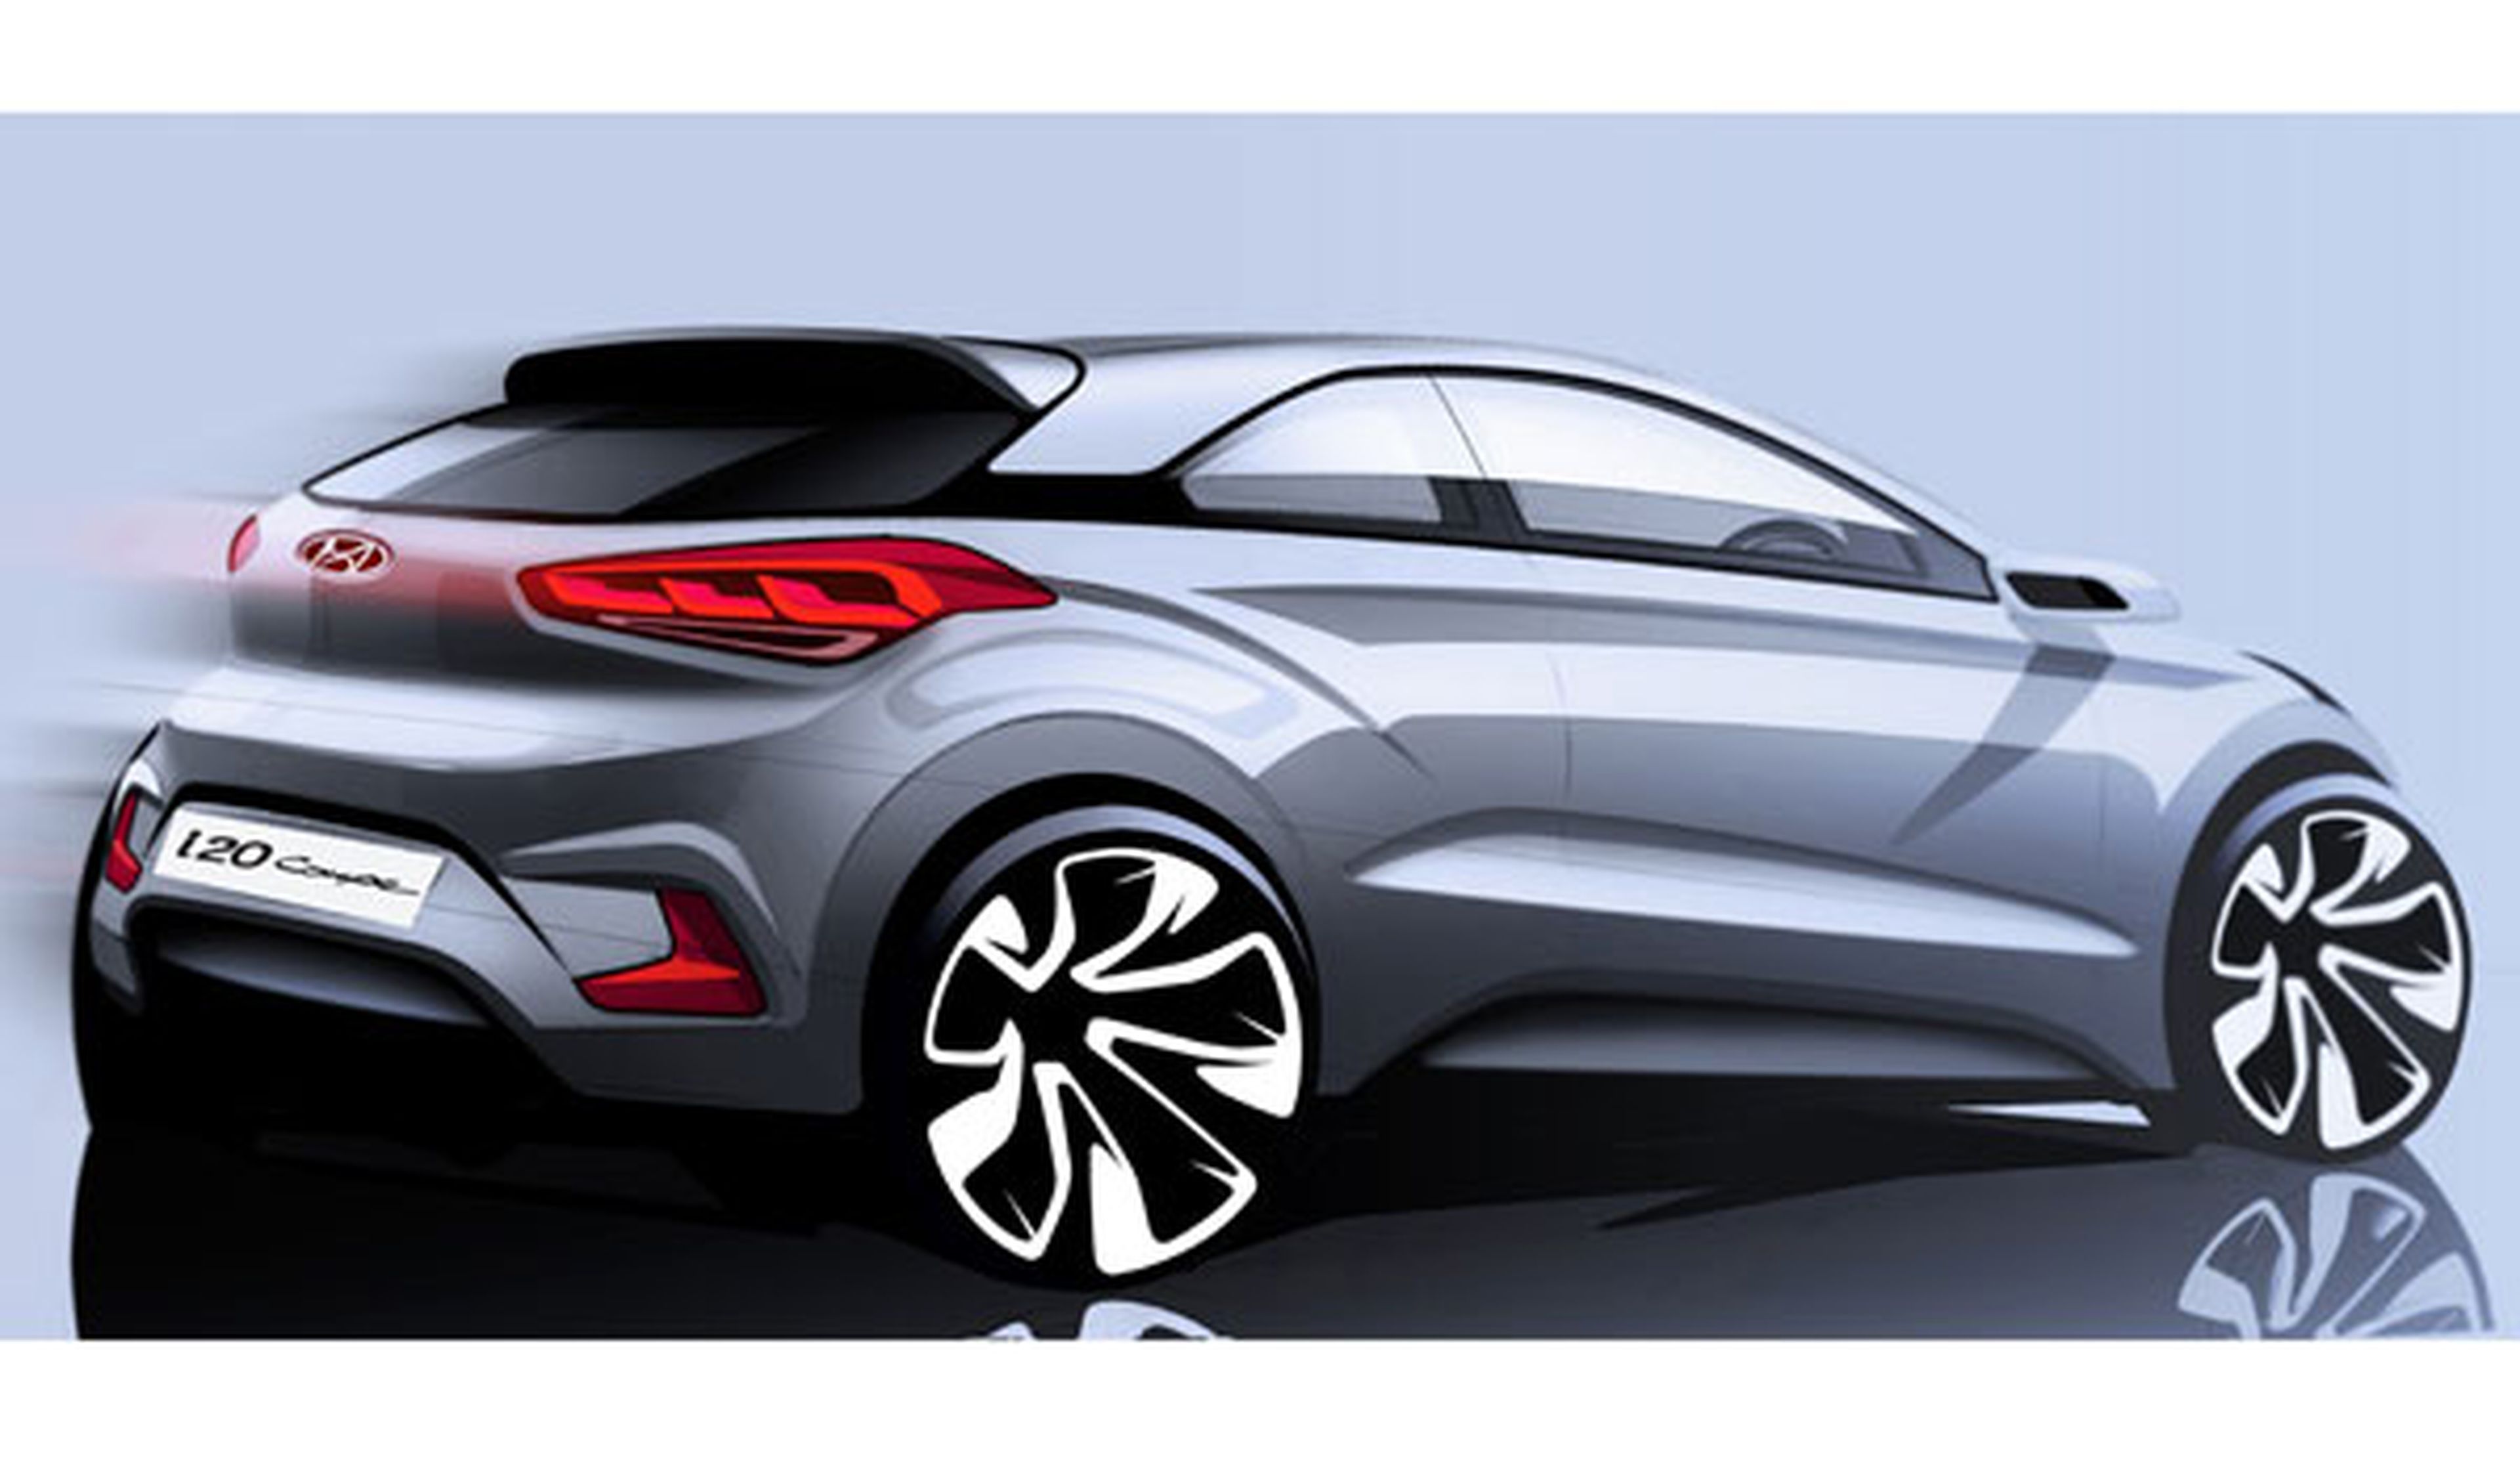 Nuevo Hyundai i20 Coupe: primer teaser